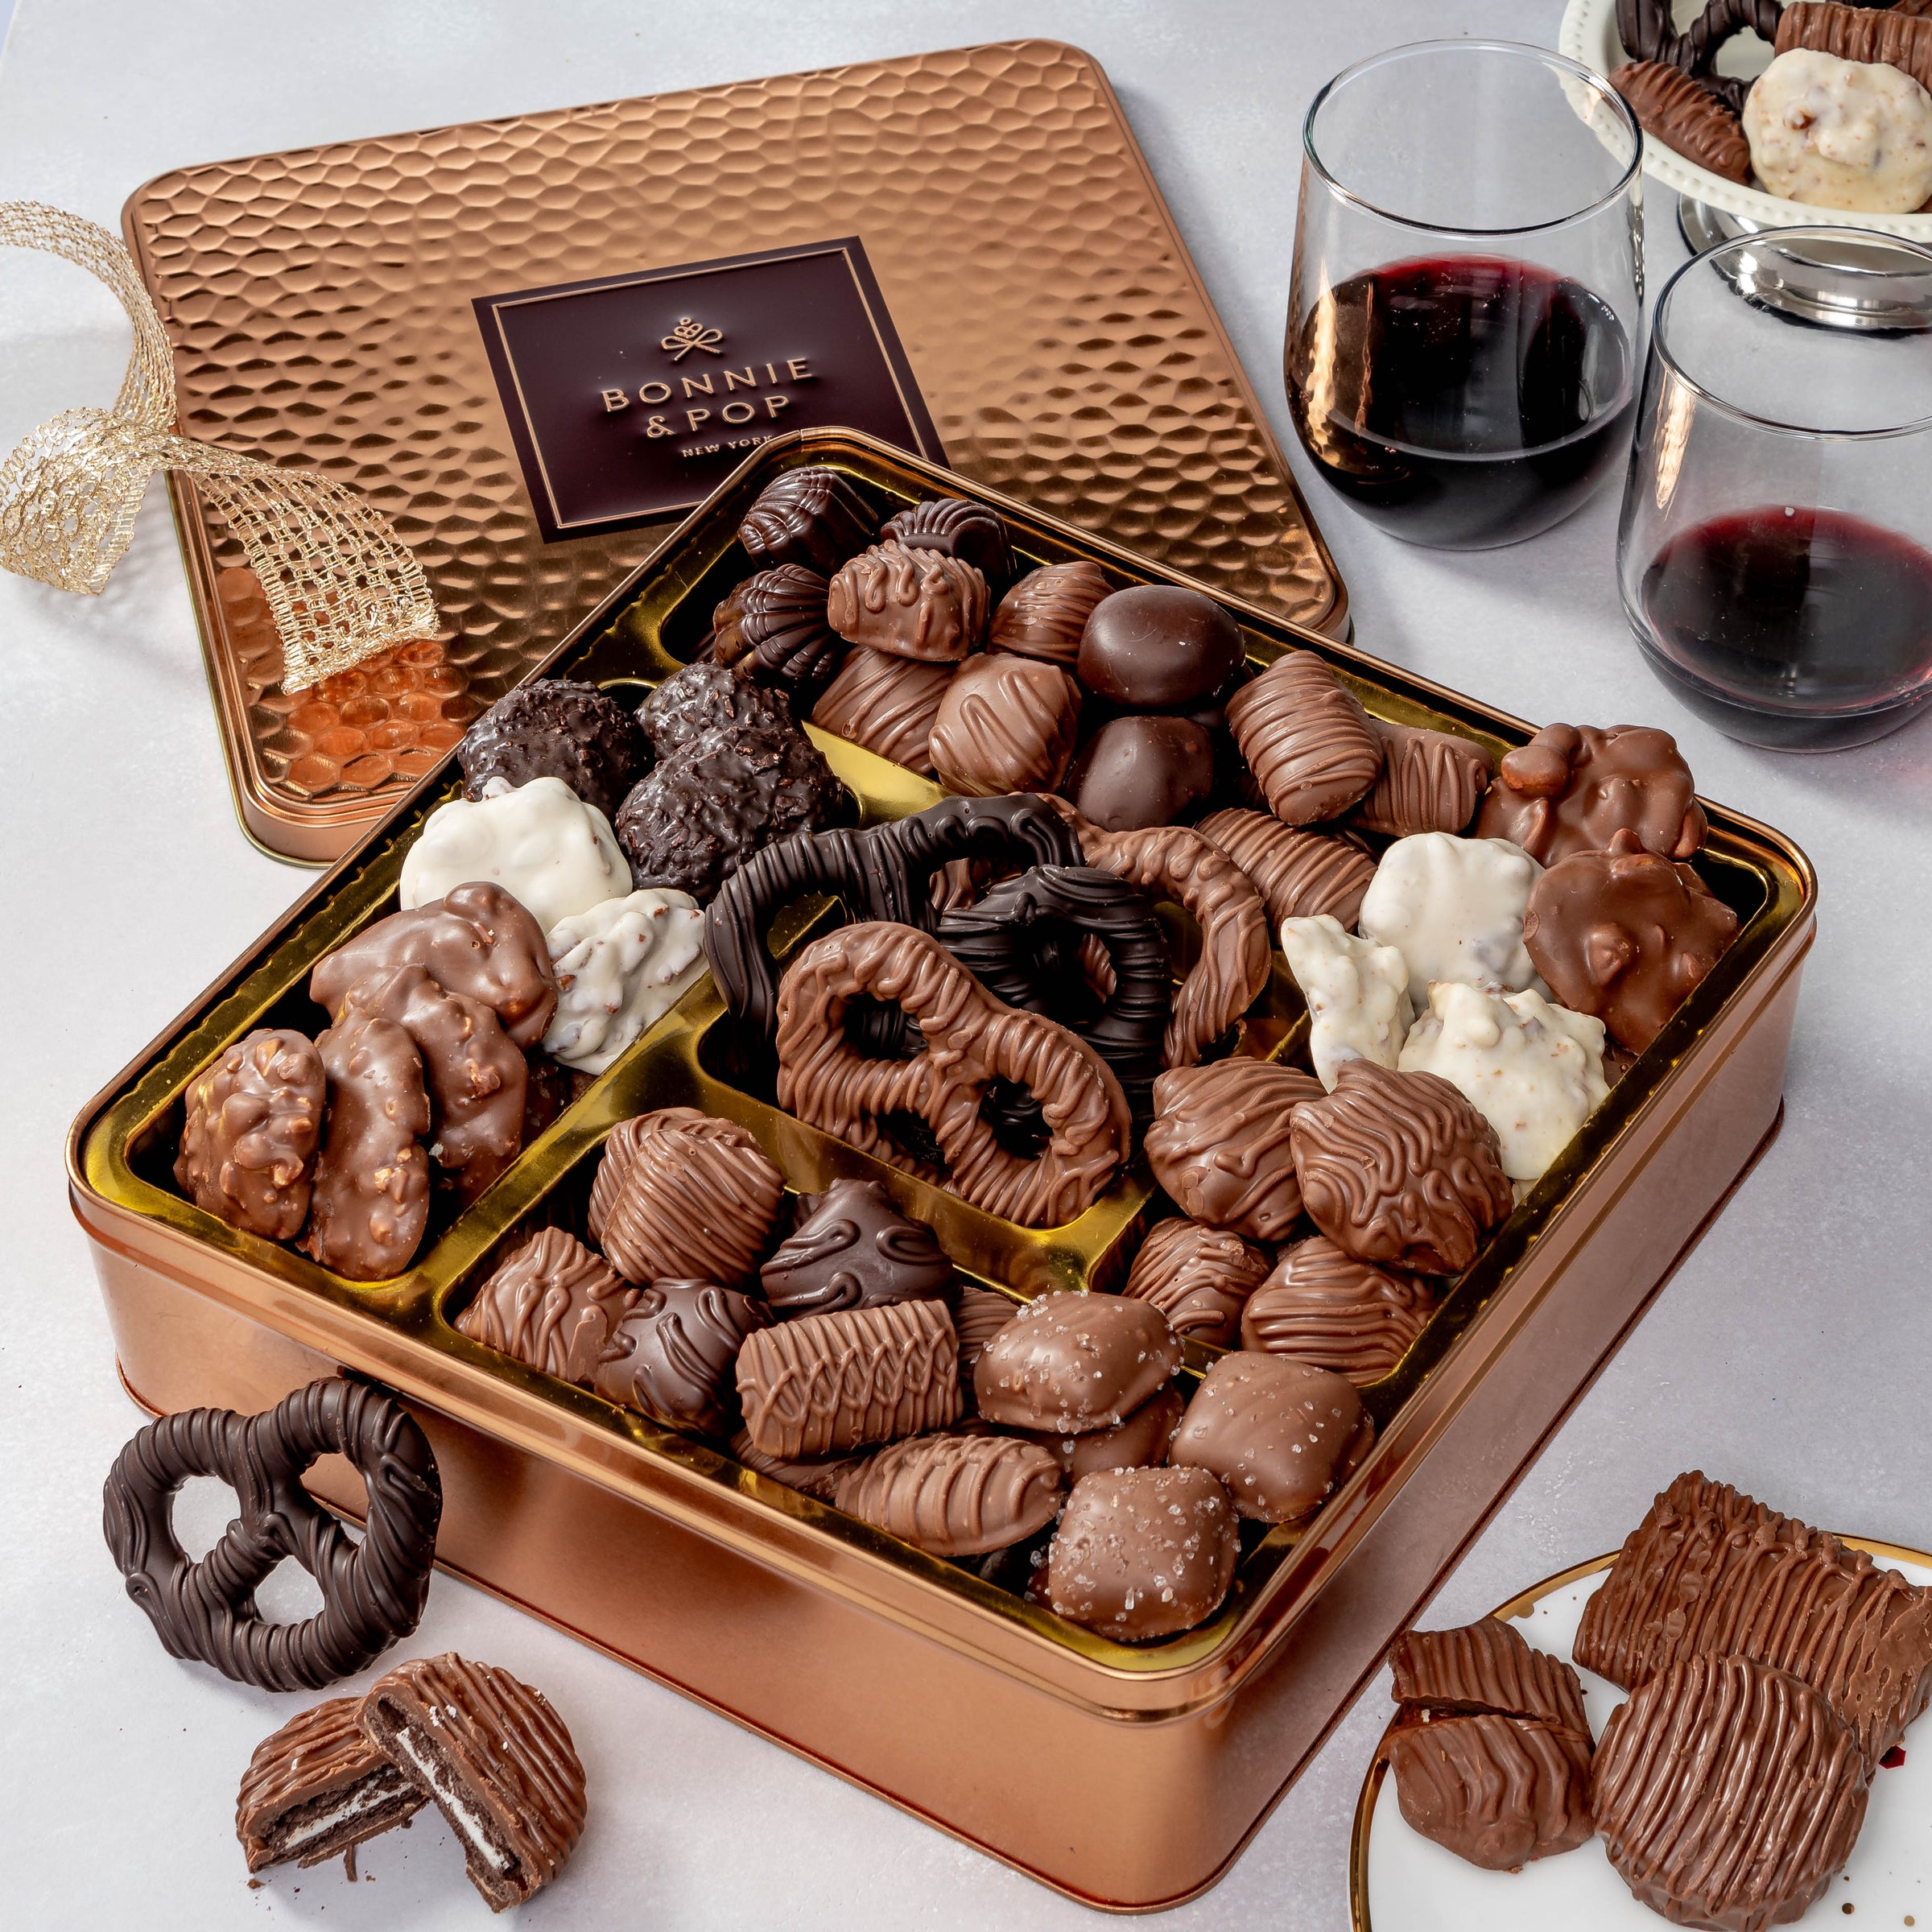 Chocolate Gourmet Gift Basket